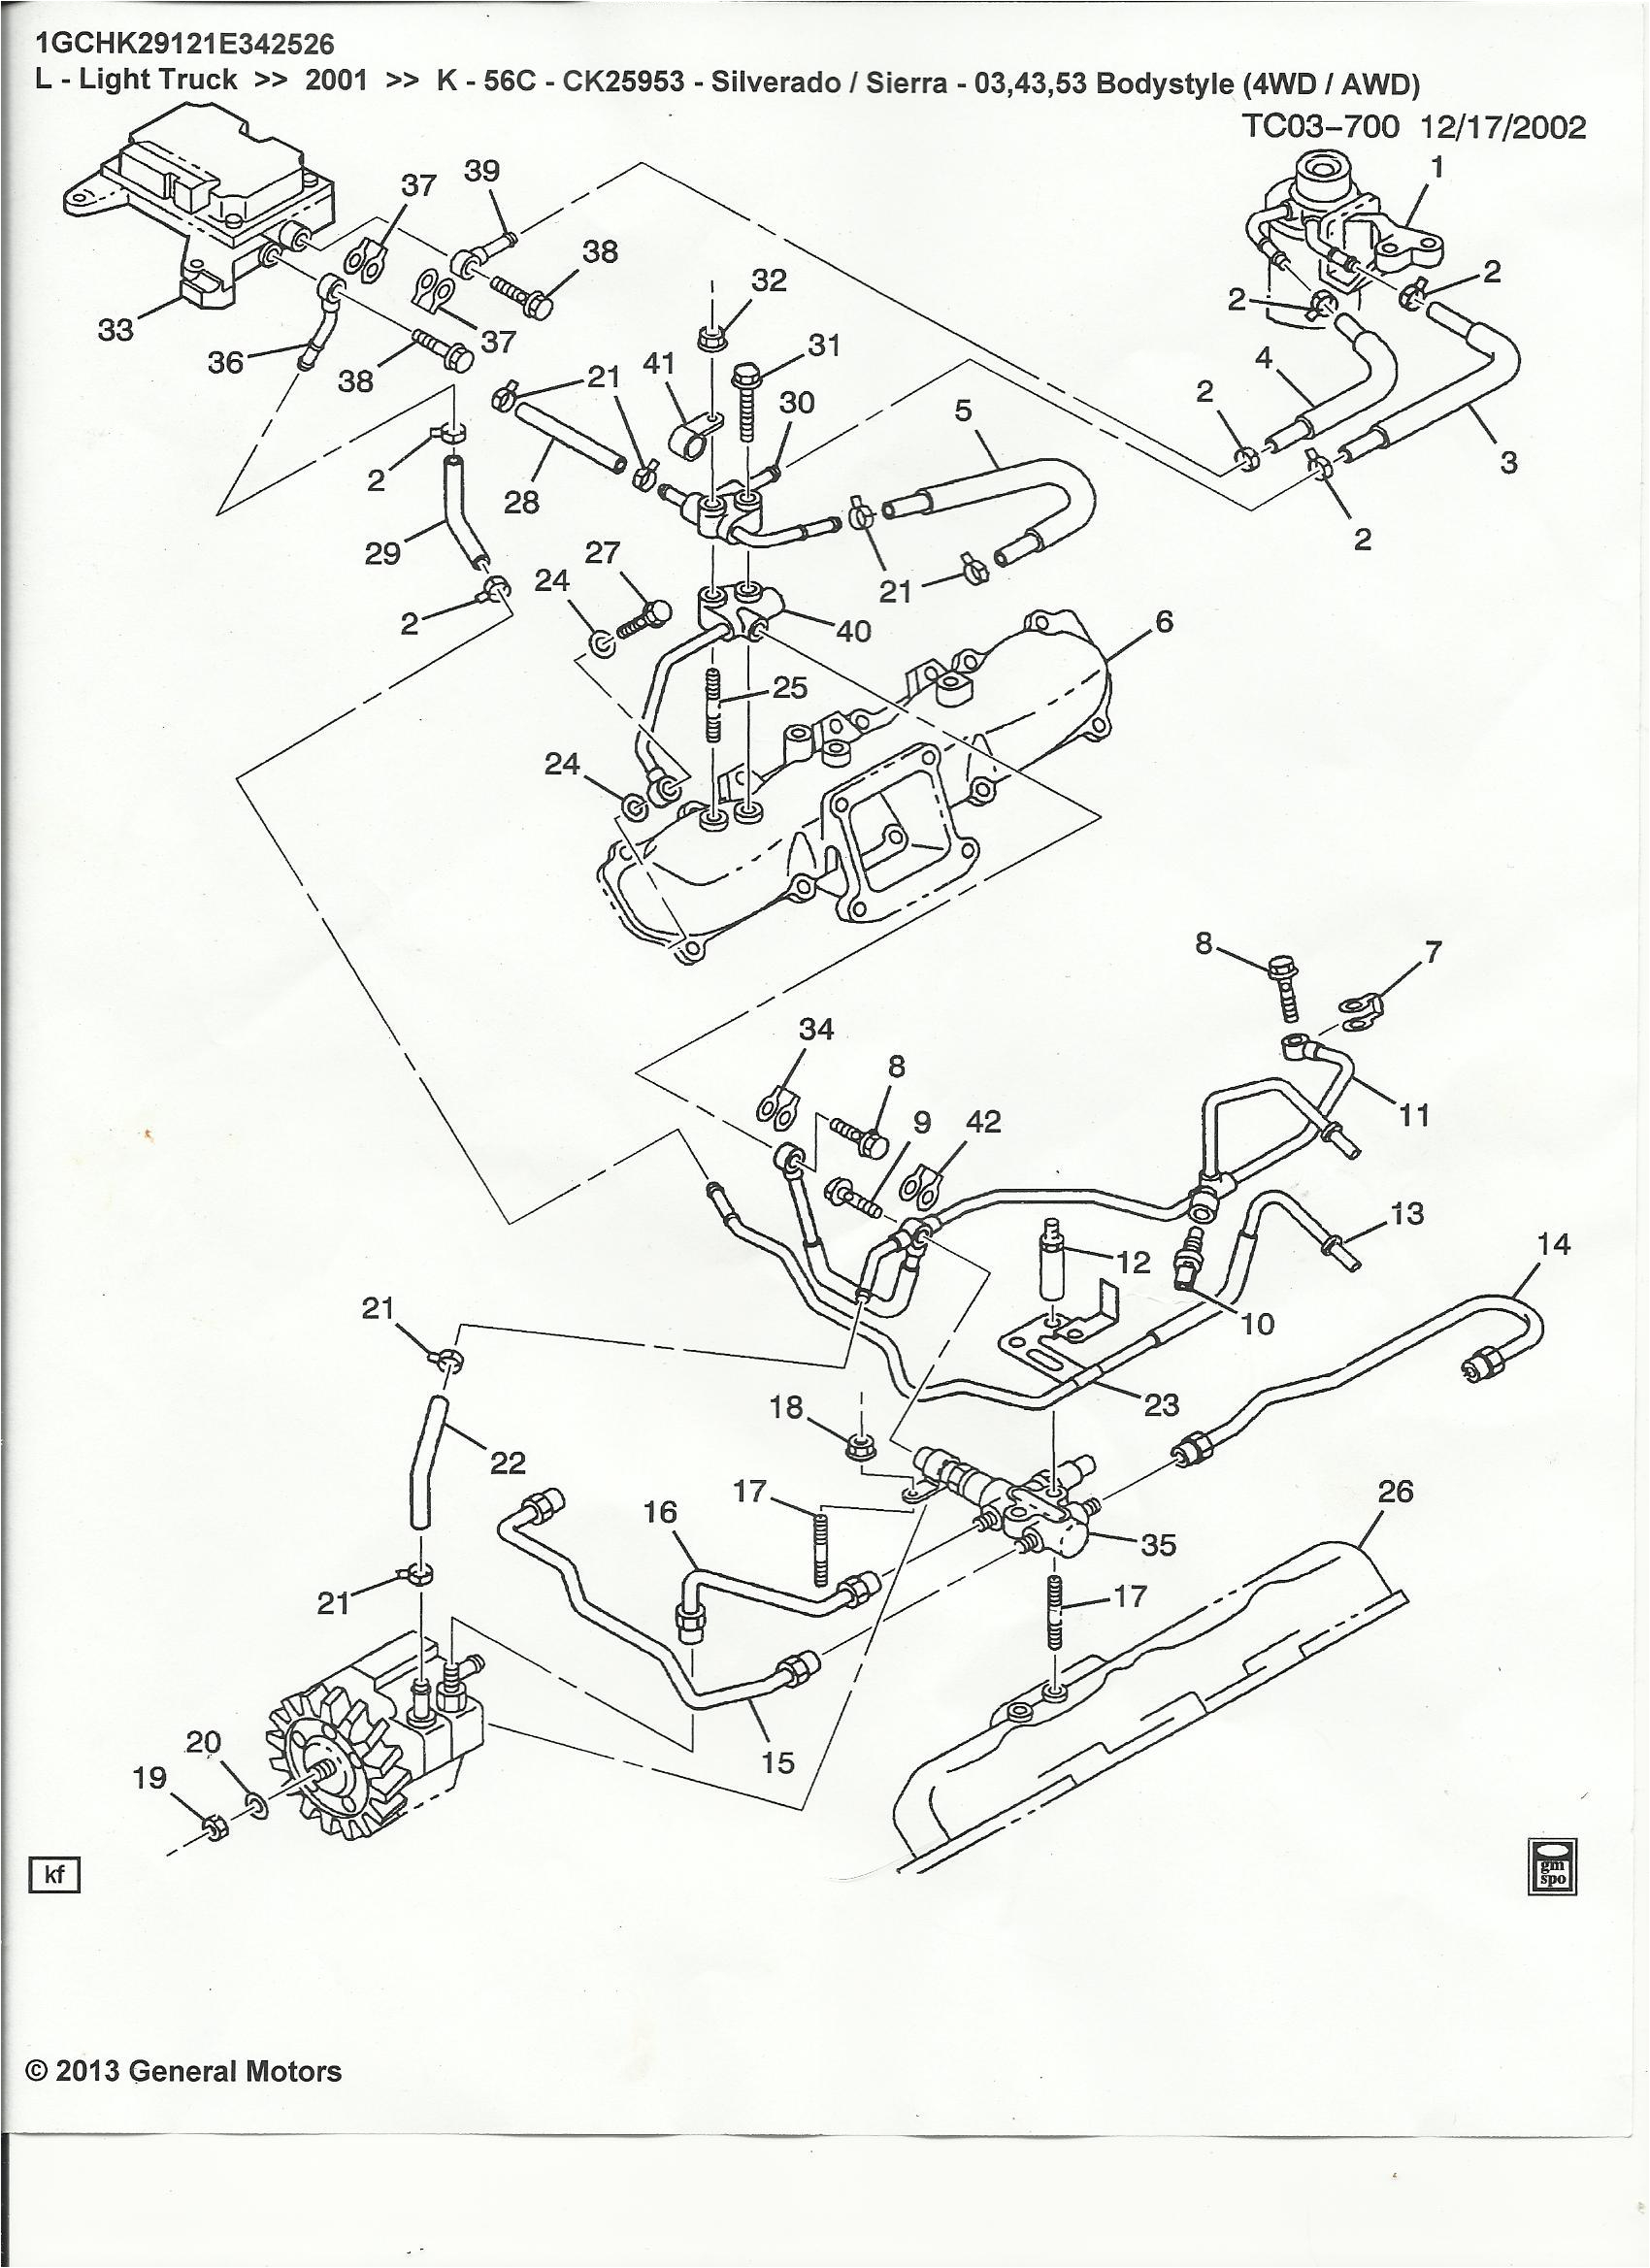 duramax wiring diagram wiring diagram 2002 duramax lb7 ficm wiring diagram